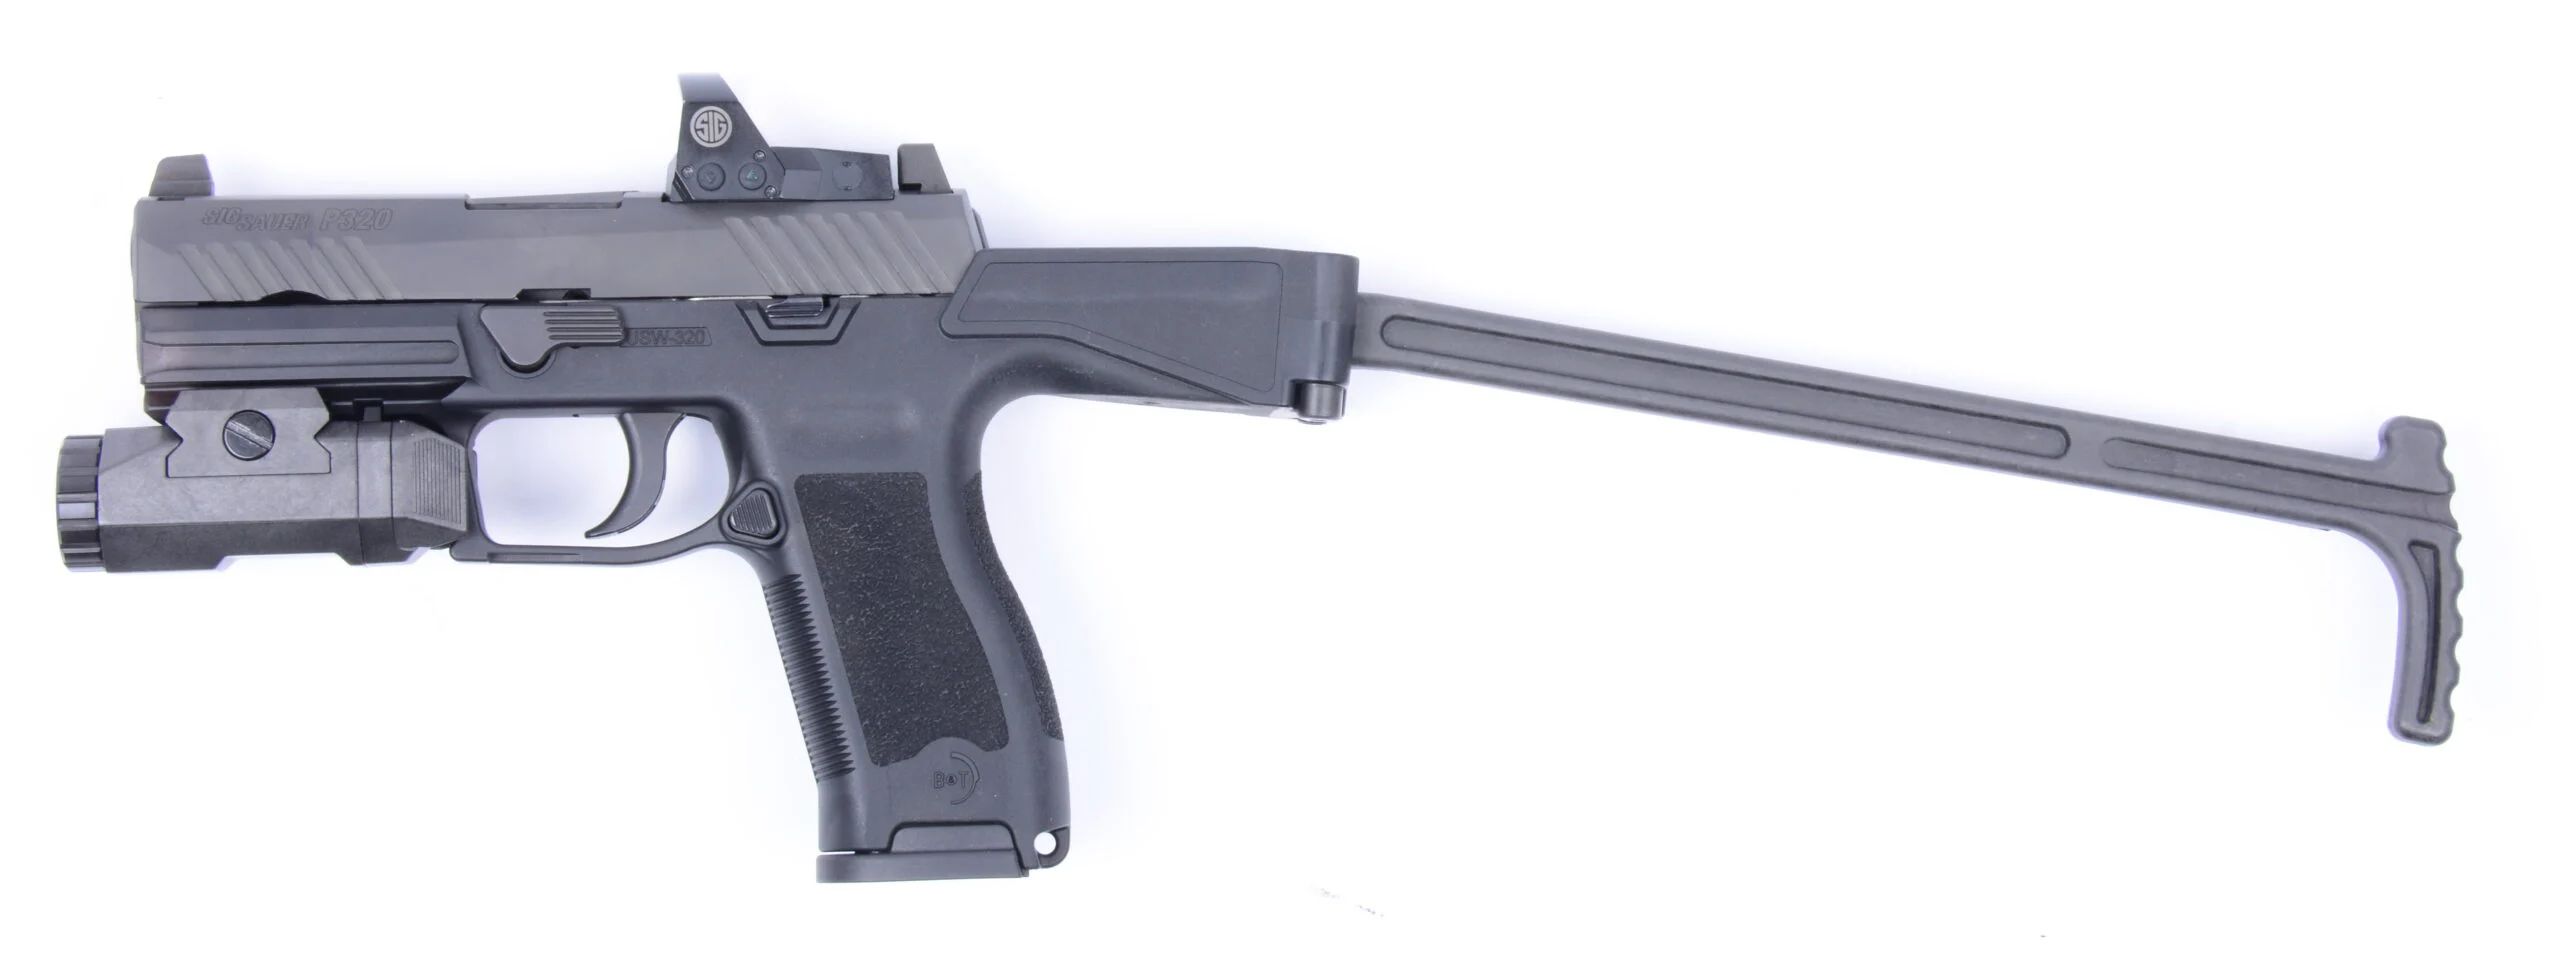 Konverze B&T USW-320 pro pistole Sig Sauer P320